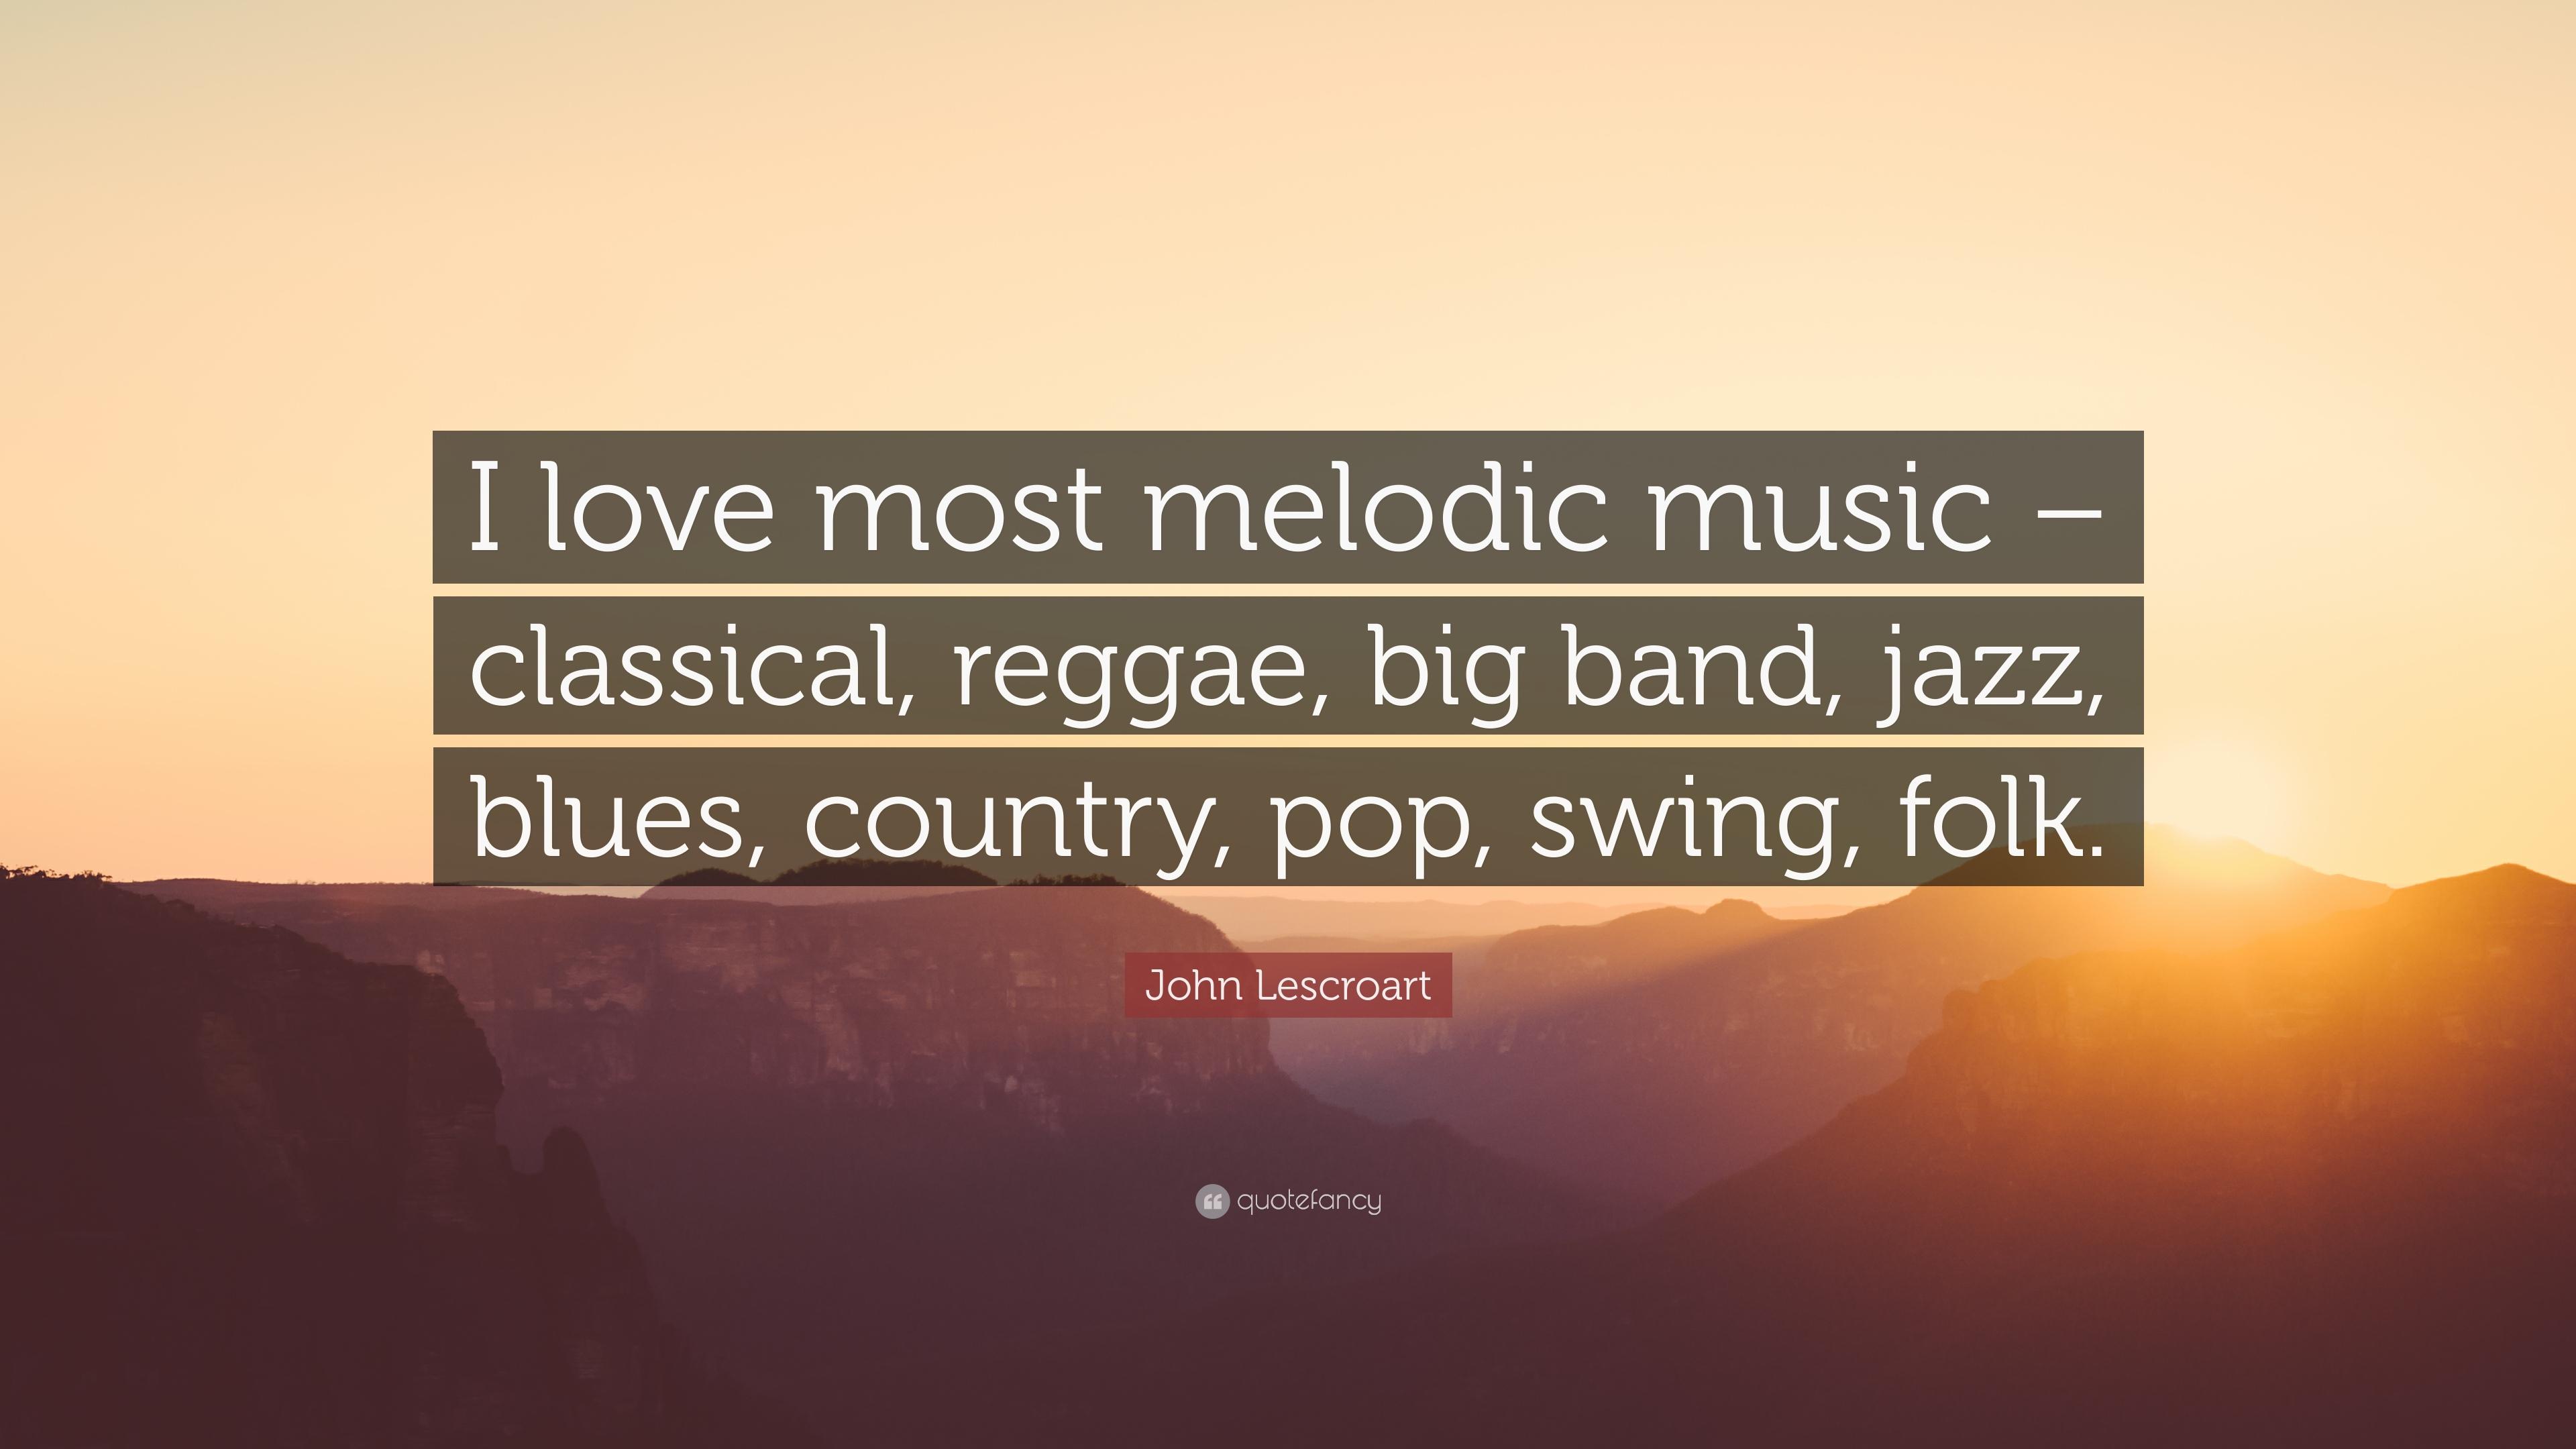 John Lescroart Quote: “I love most melodic music